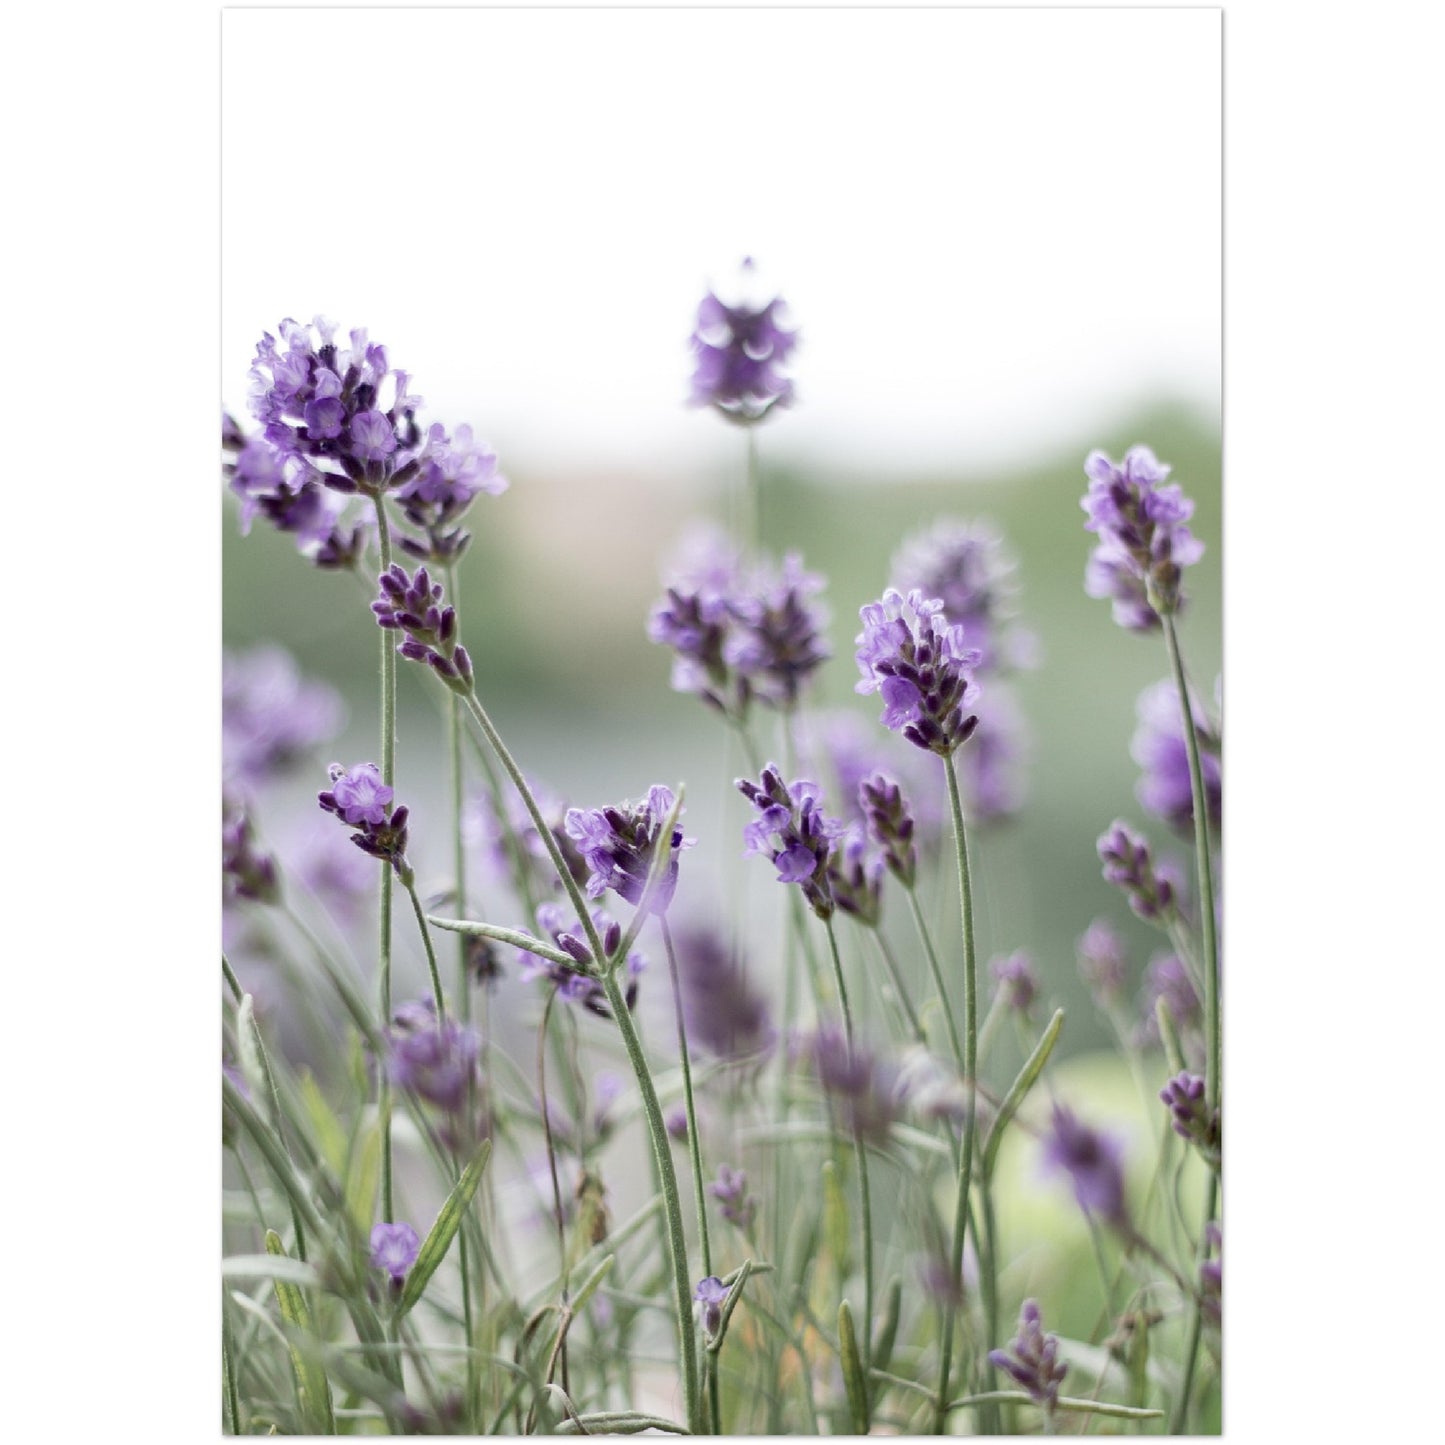 Lavender Print